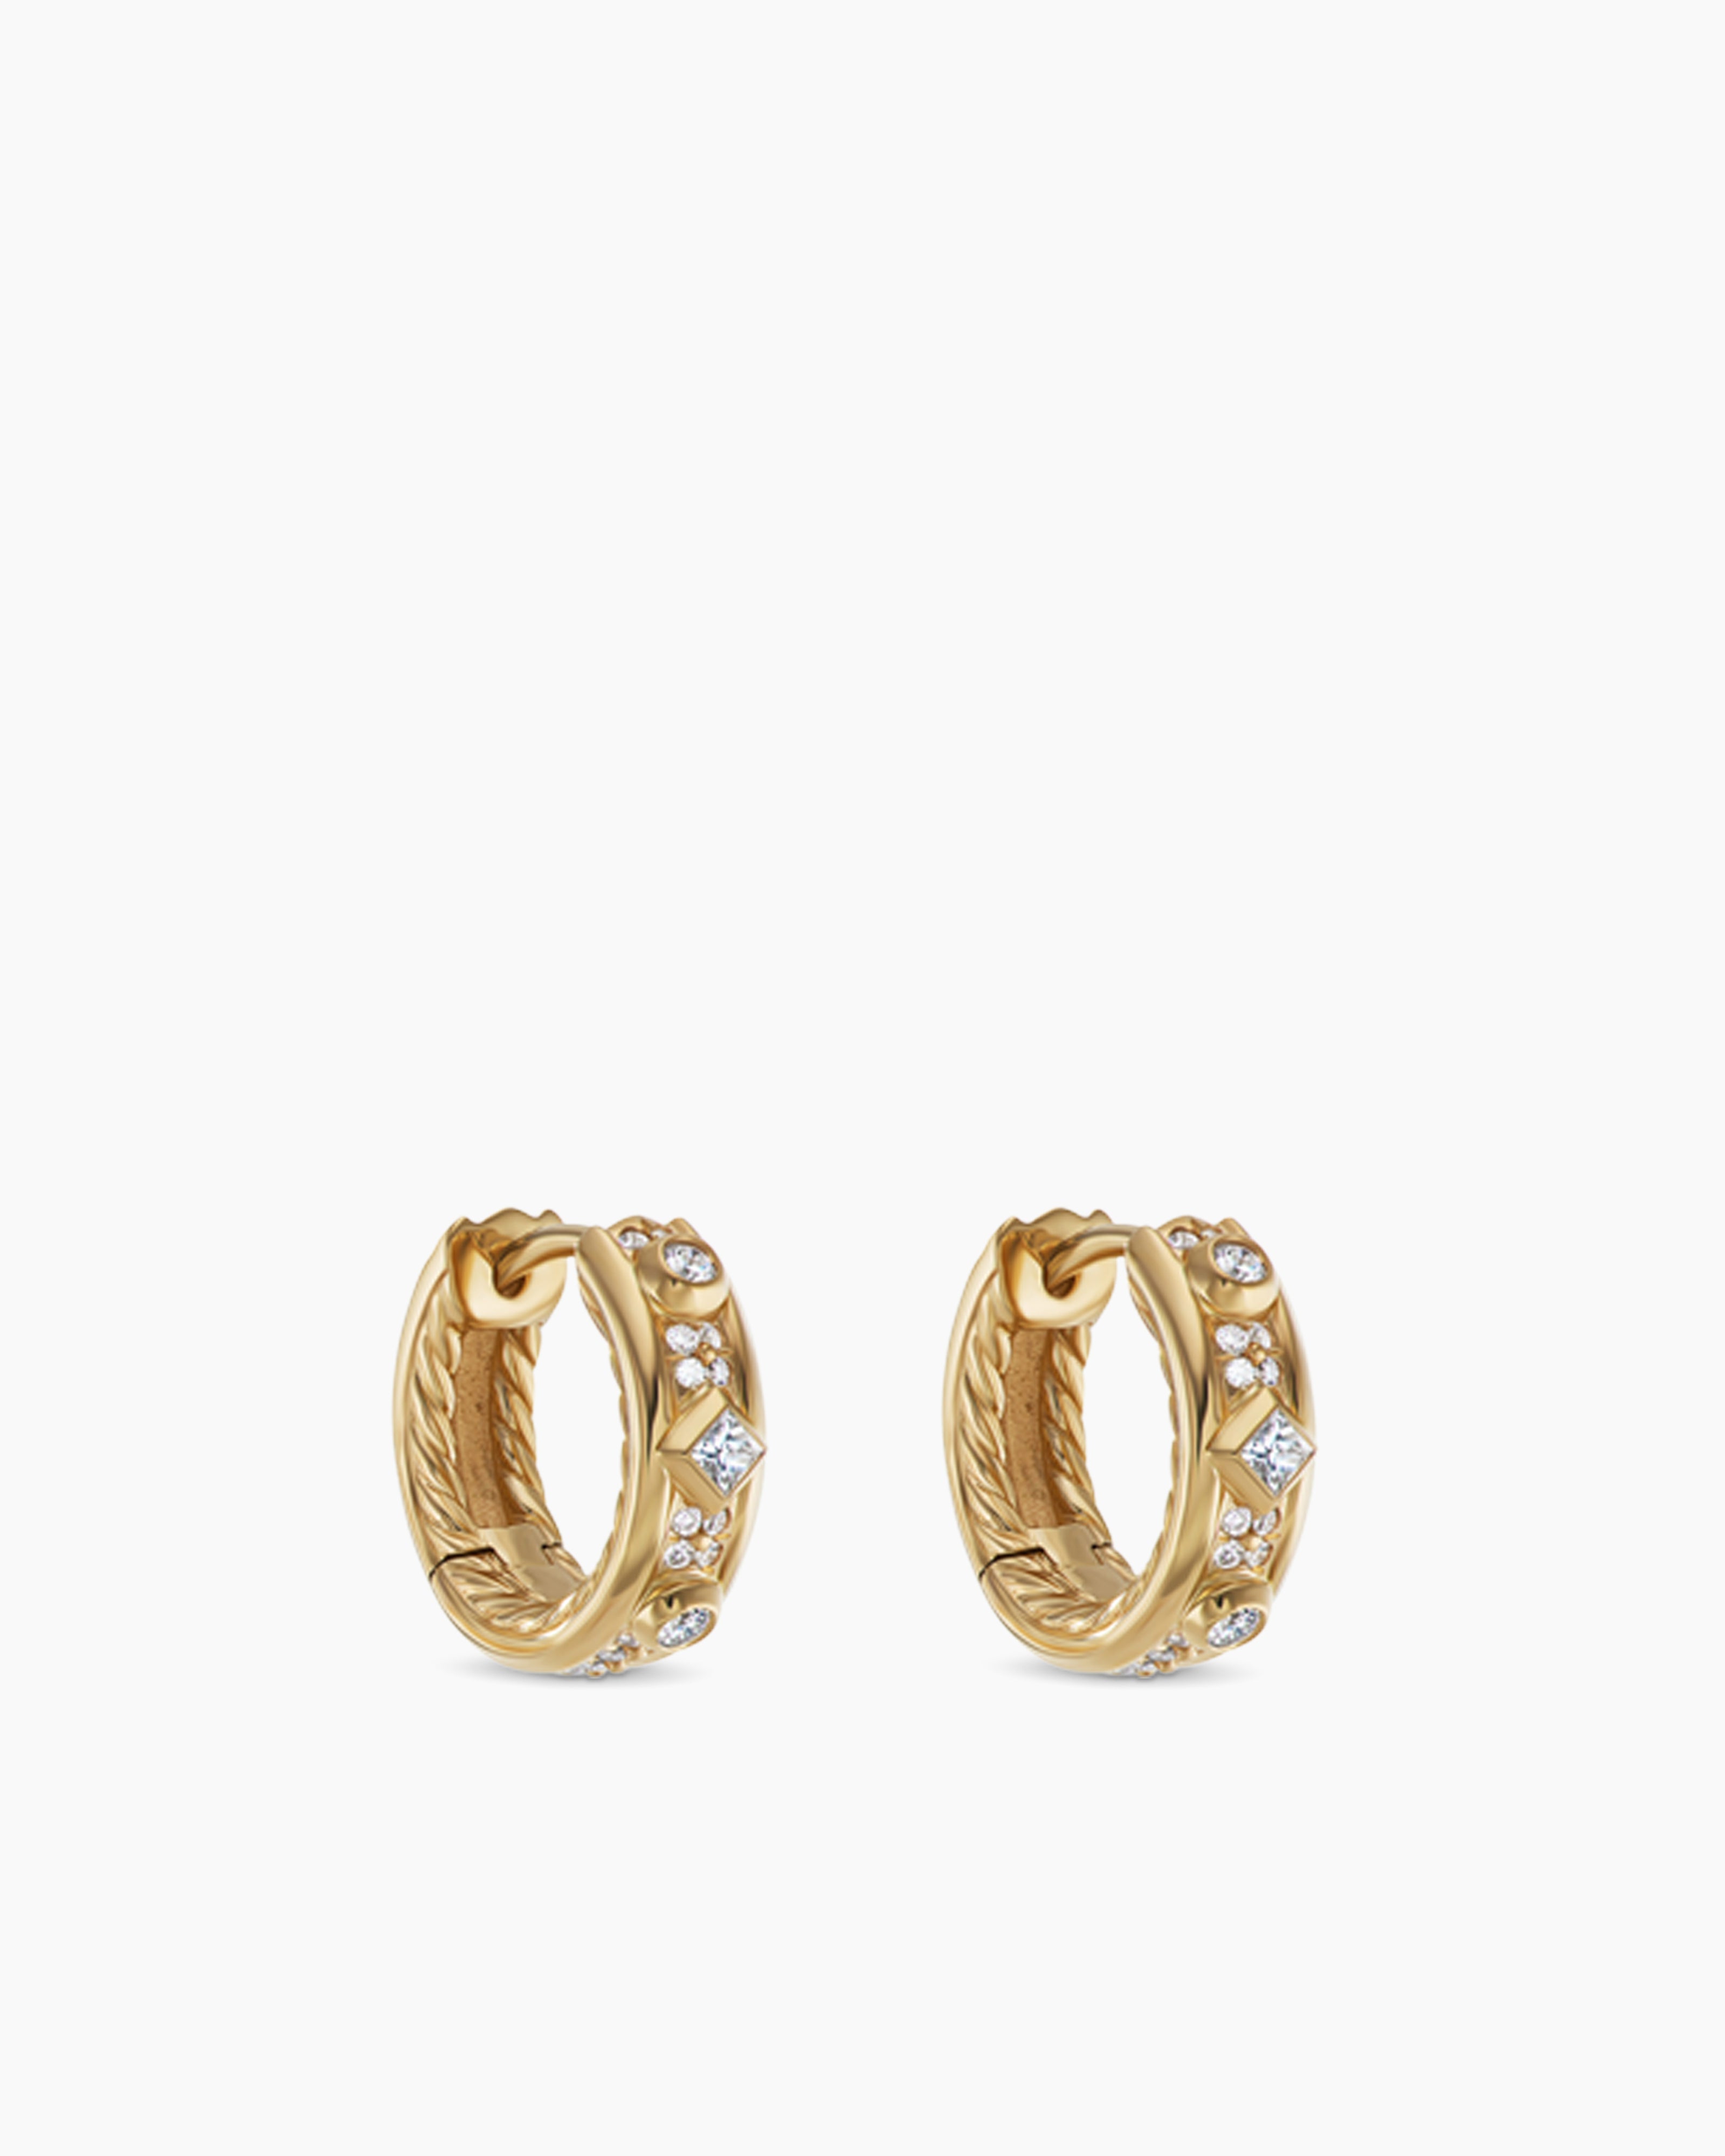 Buy Earrings online in Pune for best prices.